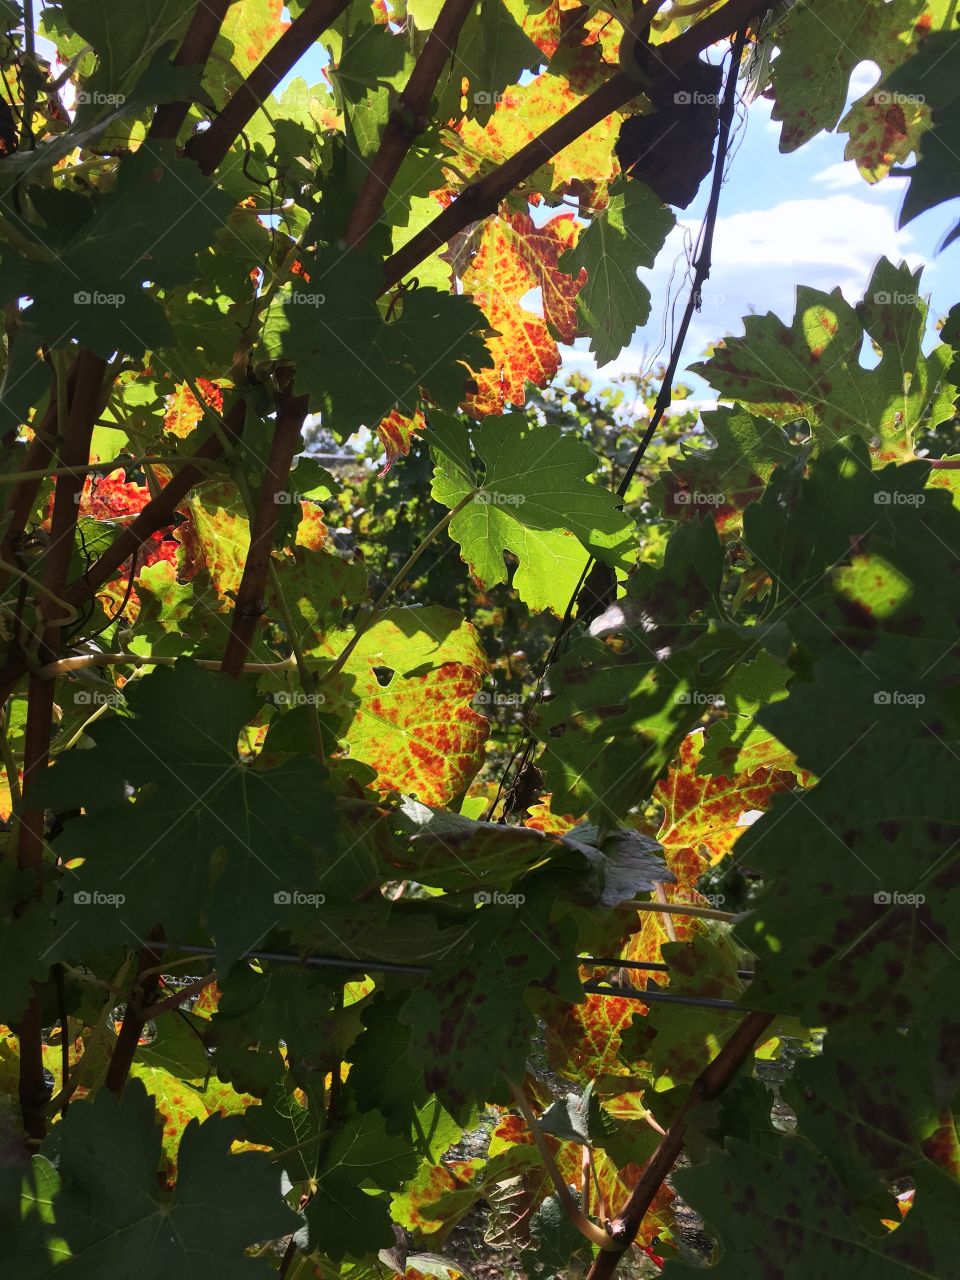 Fall in Virginia Vineyards